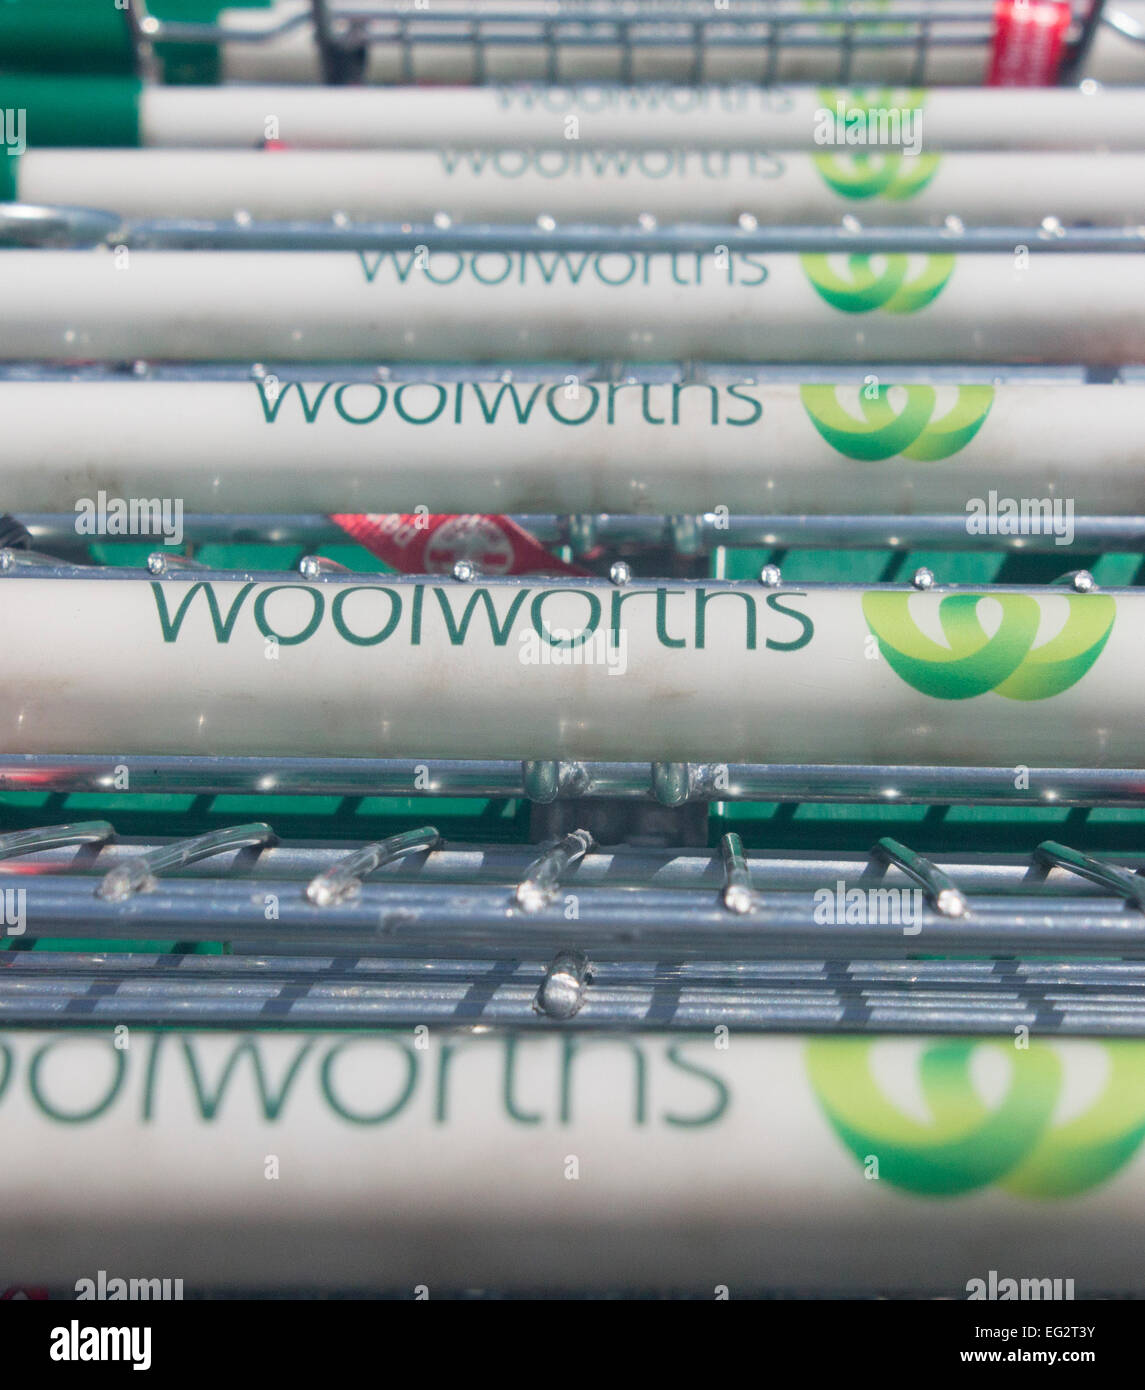 Chariots de supermarché Woolworths NSW Australie Banque D'Images